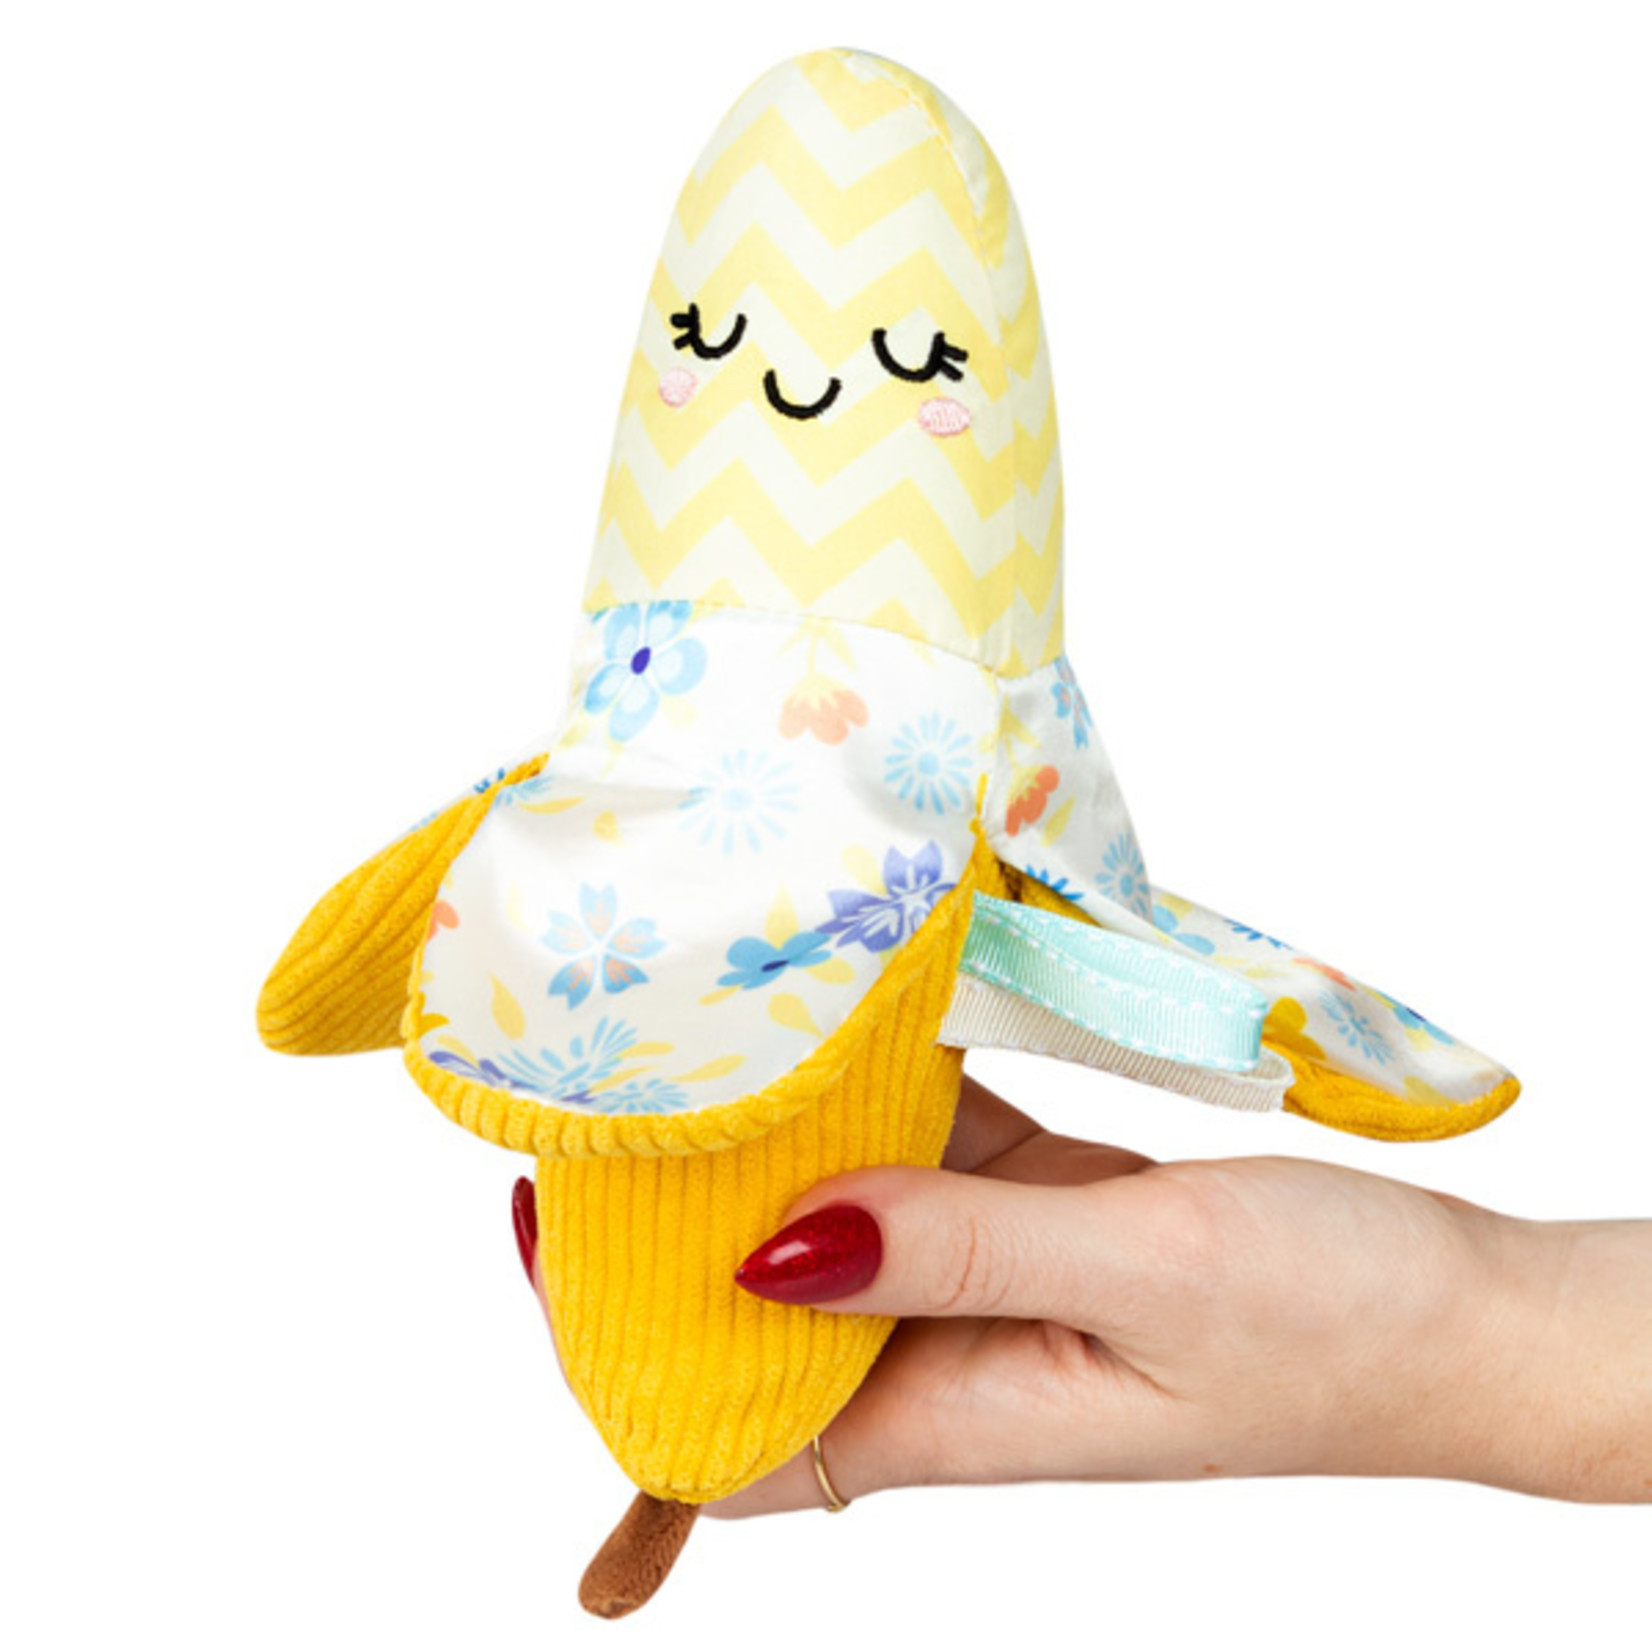 Squishable Picnic Baby - Banana